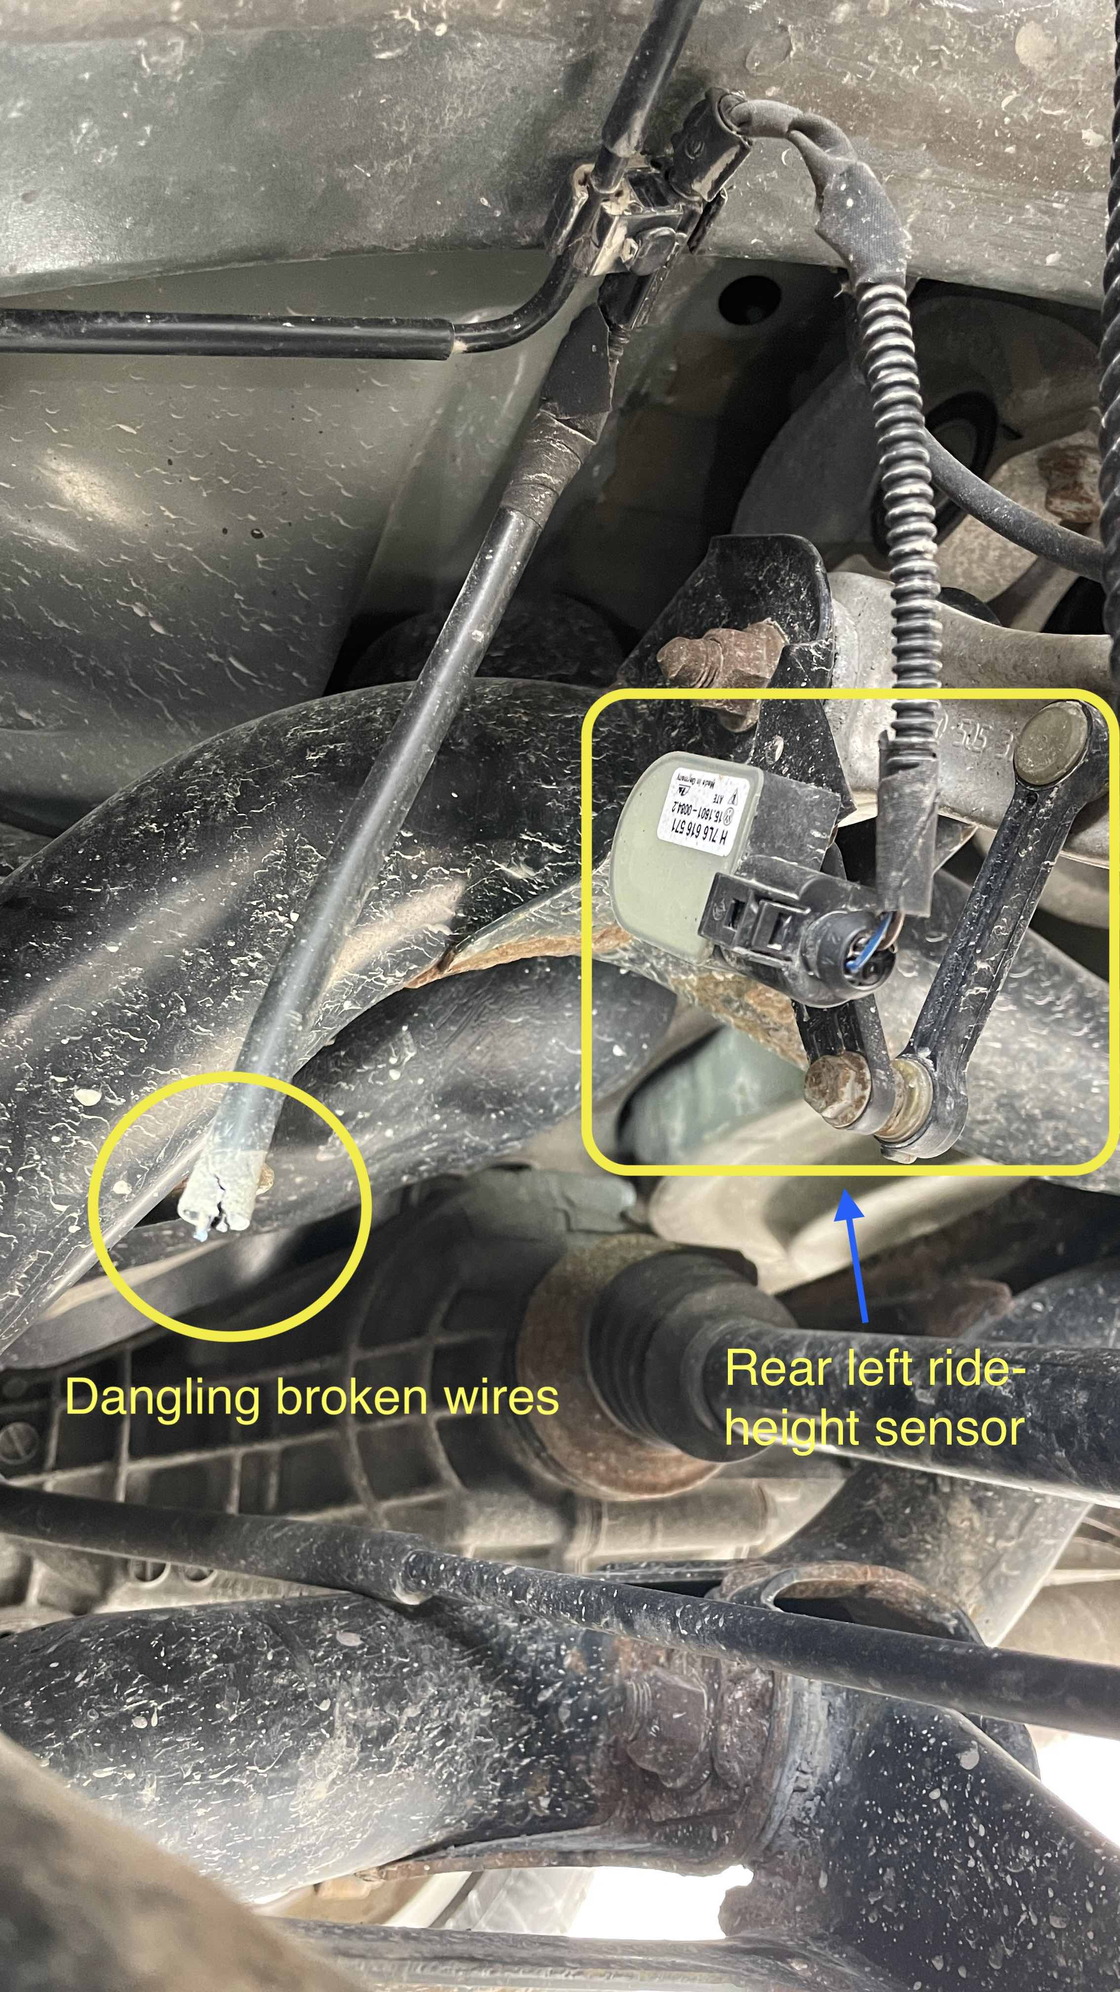 2014 Q7 Rear Left Ride-Height Sensor Broken Wire - AudiWorld Forums